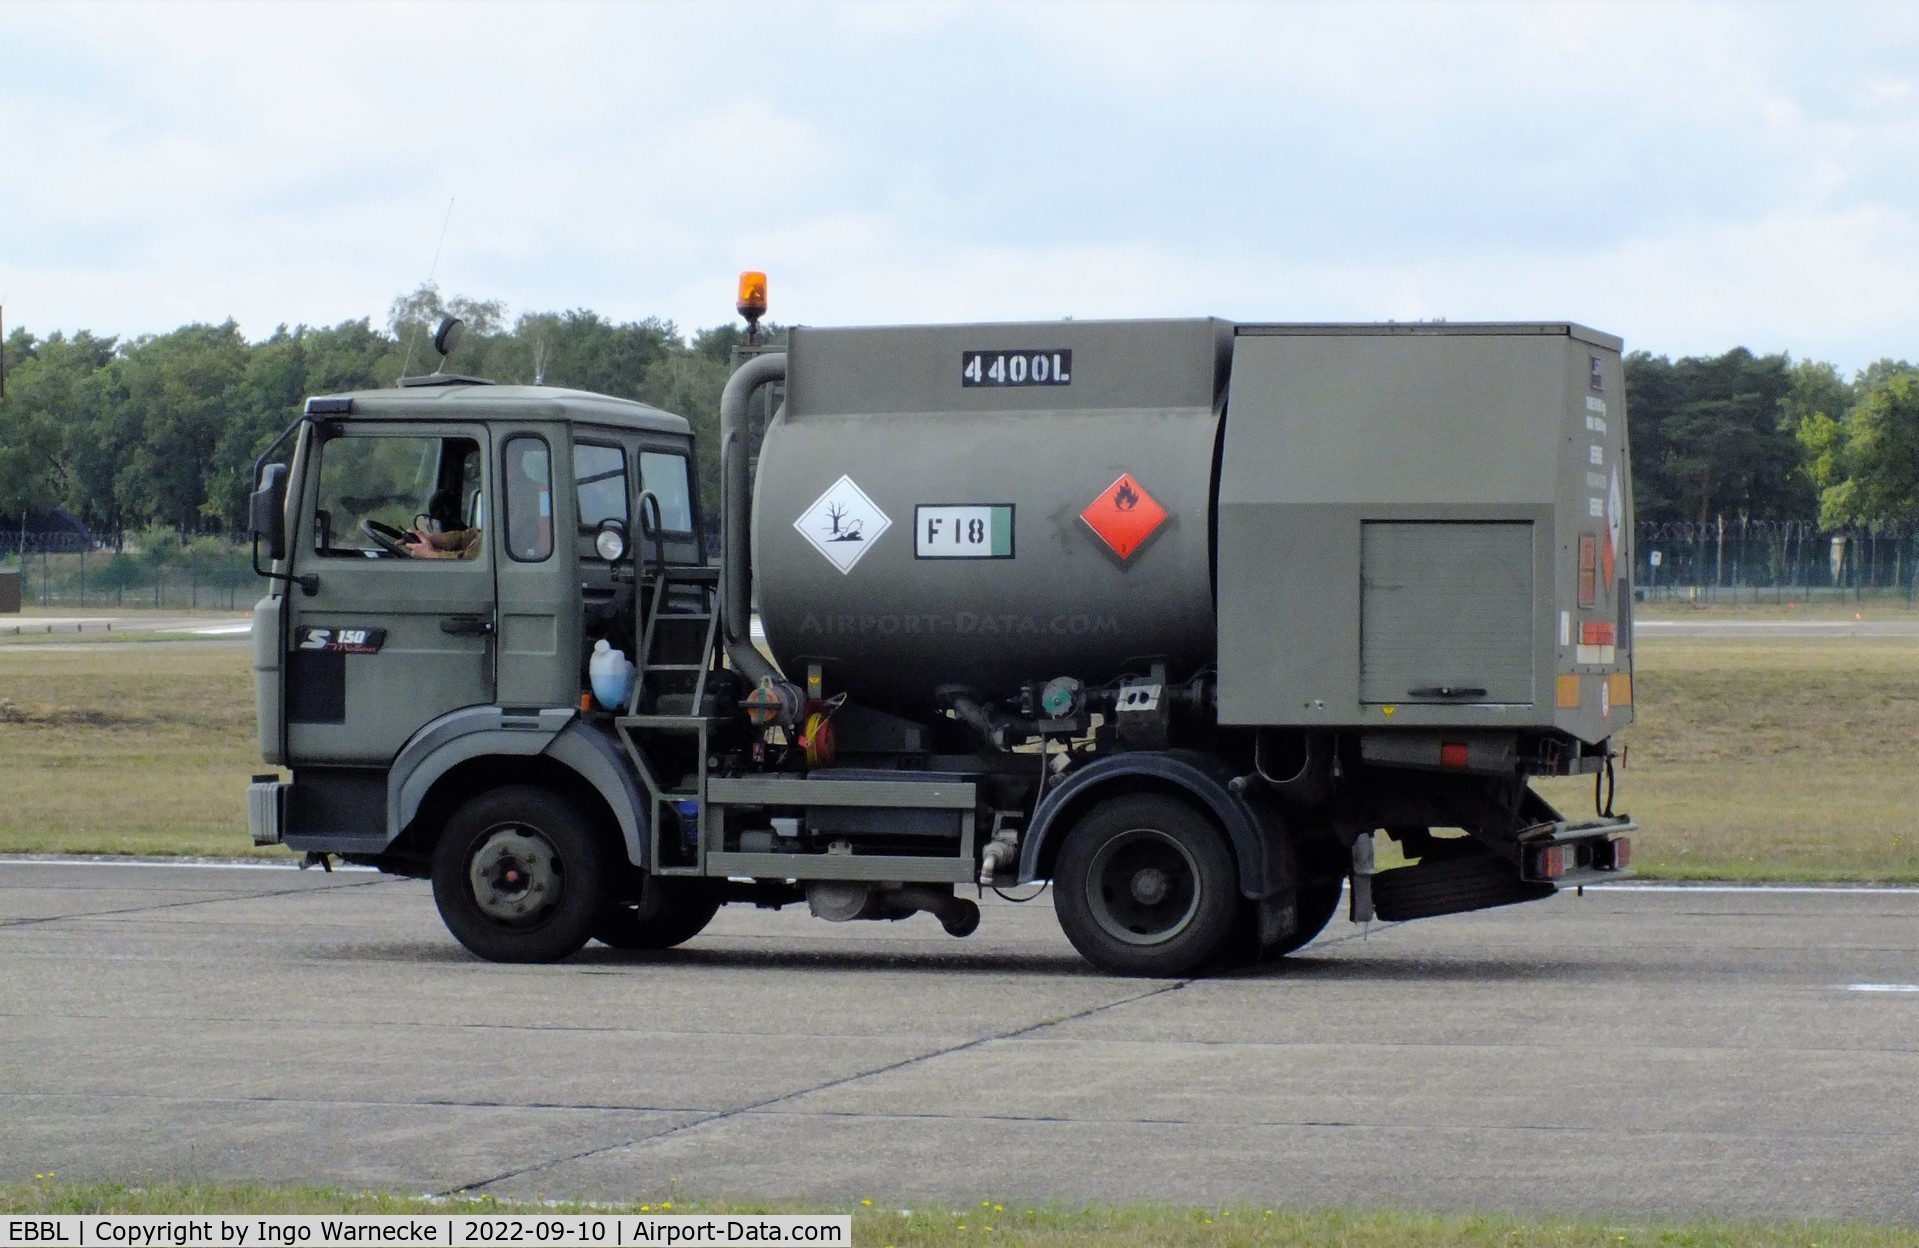 Kleine Brogel Air Base Airport, Kleine Brogel Belgium (EBBL) - Belgian Air Force light airfield fuel truck at the 2022 Sanicole Spottersday at Kleine Brogel air base